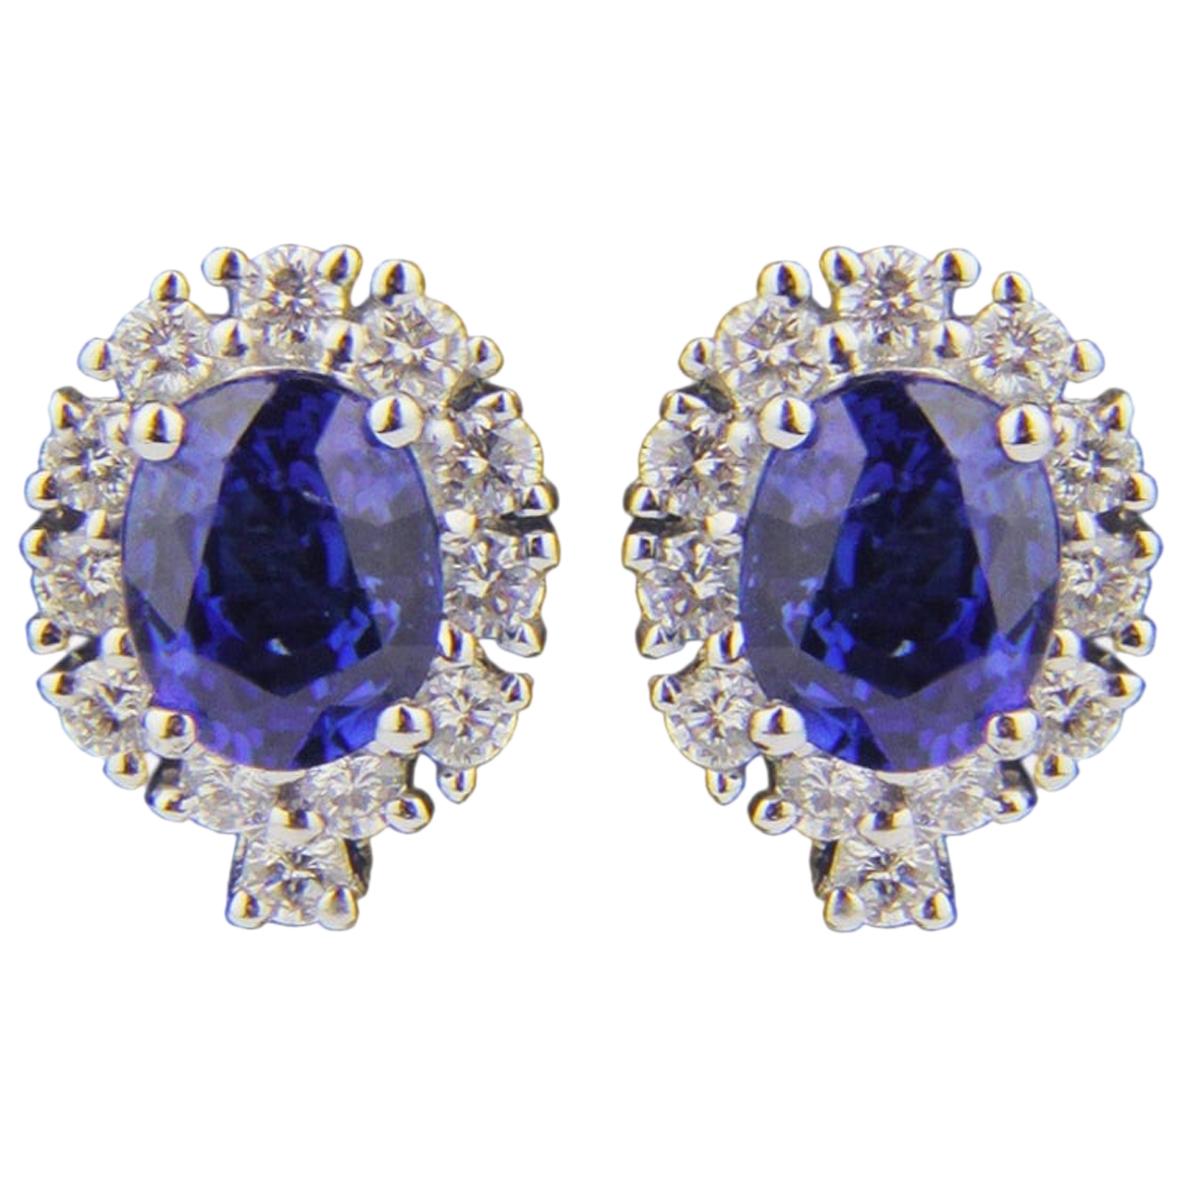 Pair of 18 Karat White Gold, Ceylon Sapphire and Diamond Earrings